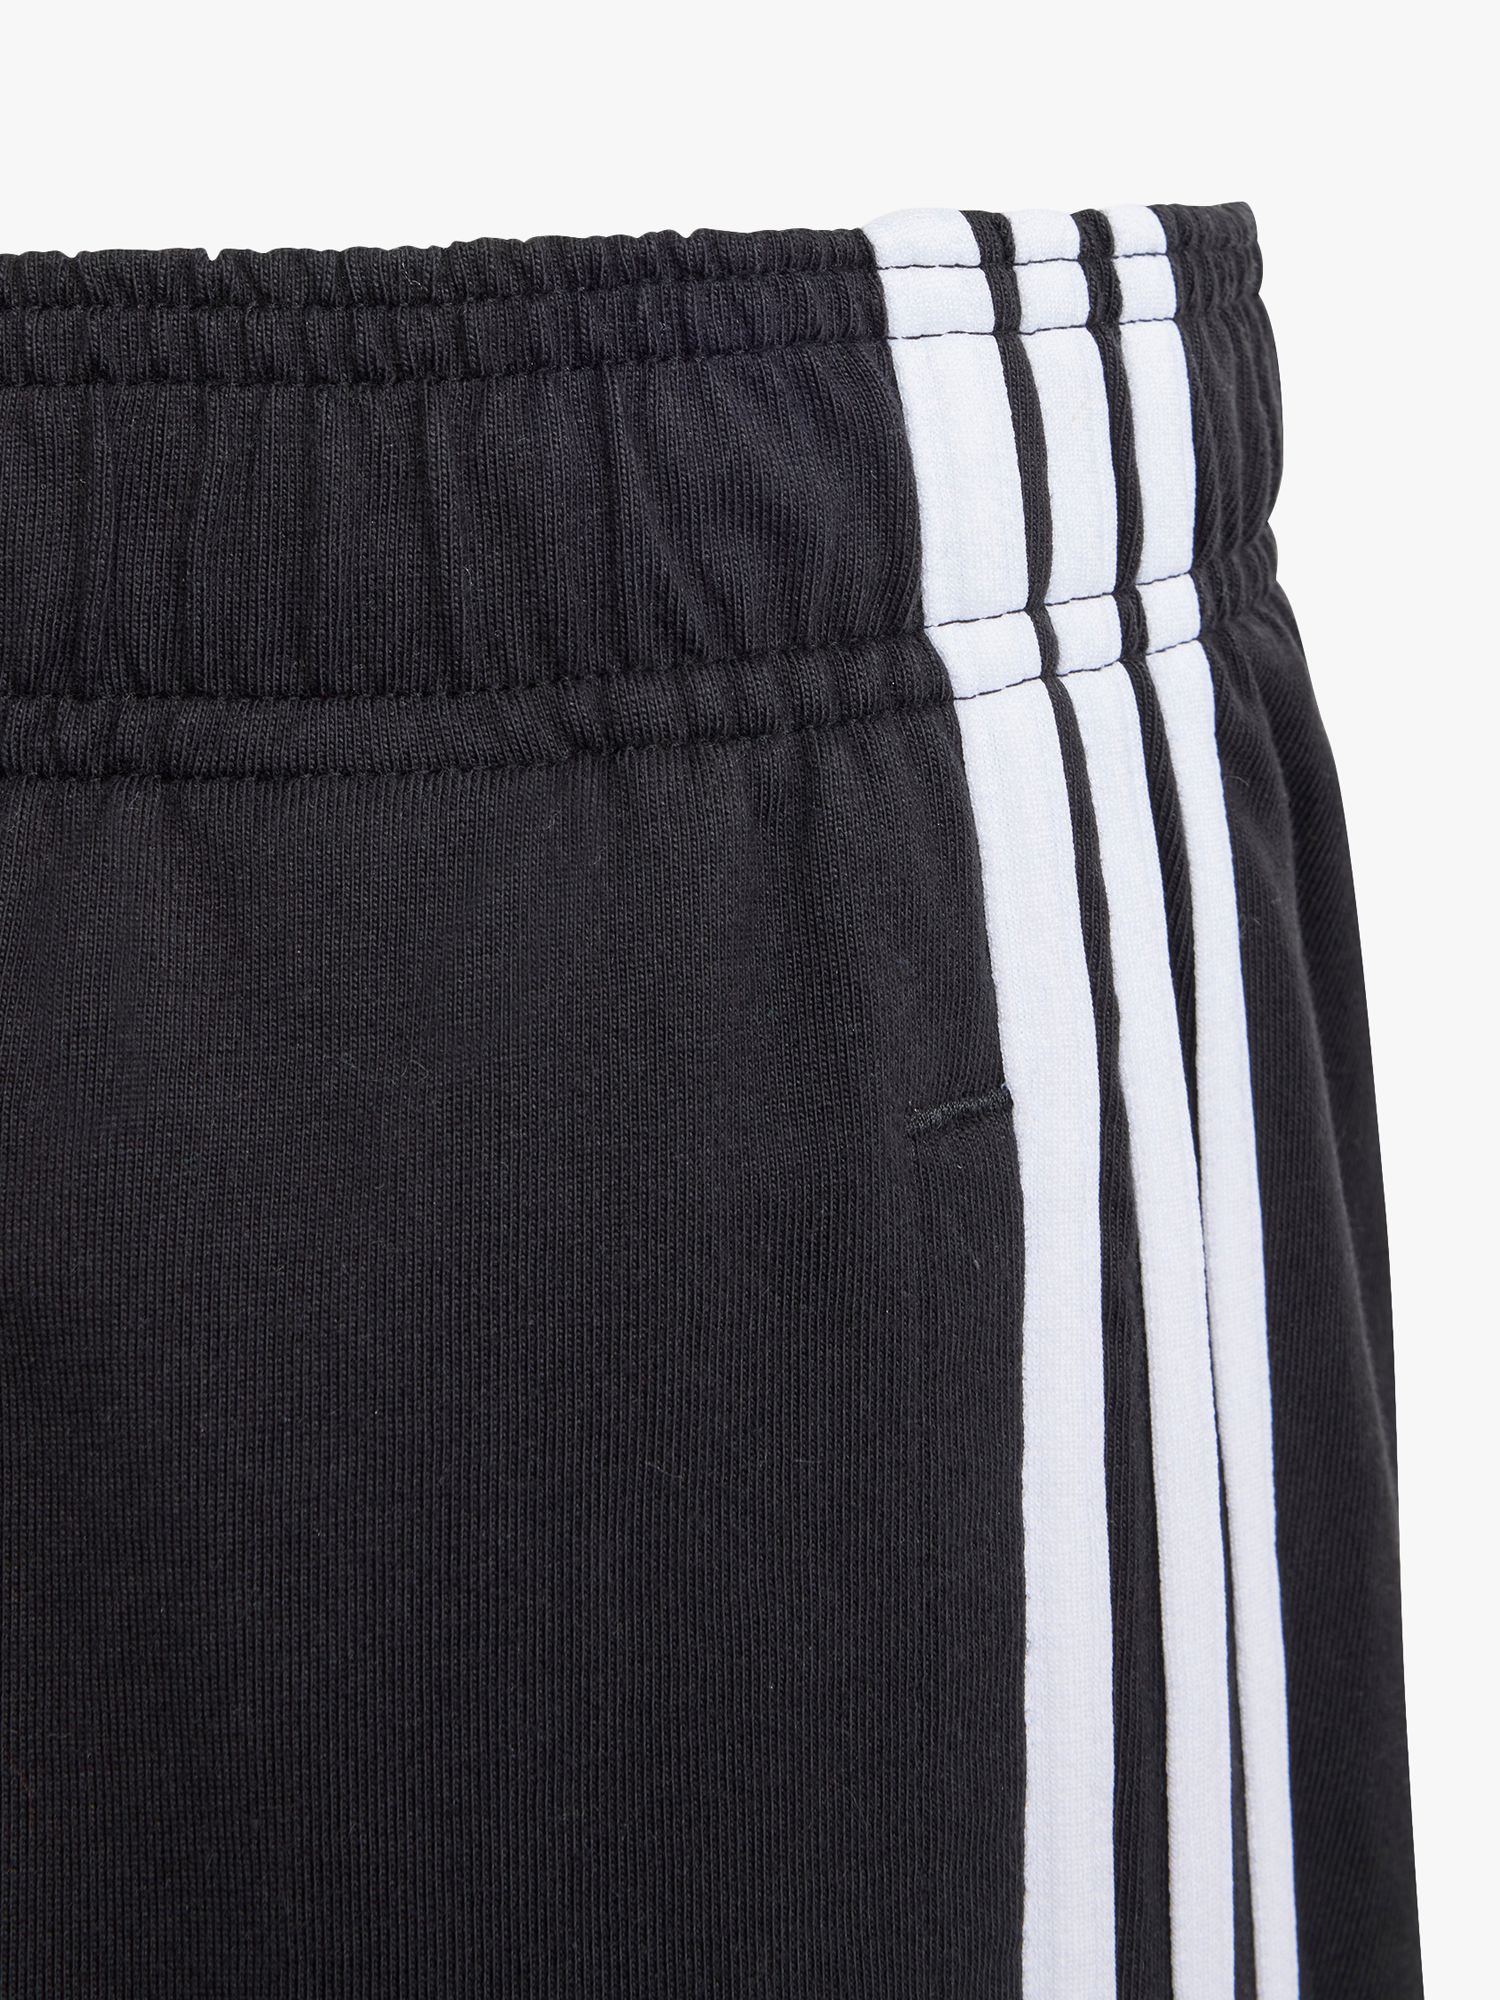 adidas Kids' Stripe Cotton Shorts, Black, 7-8 years